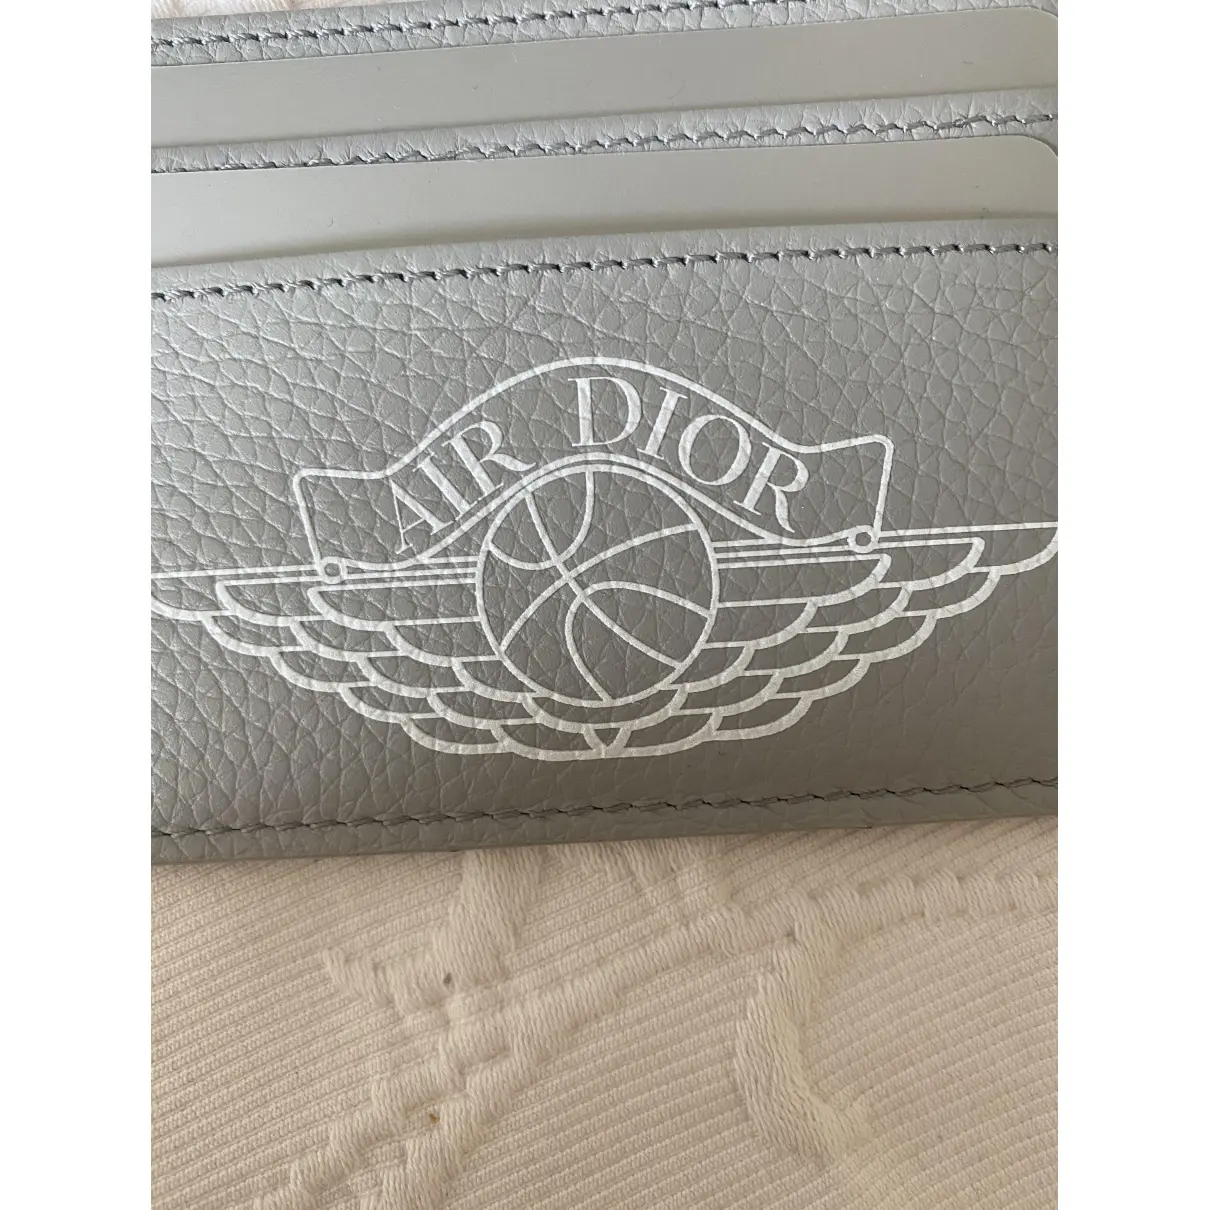 Buy Jordan x Dior Leather small bag online